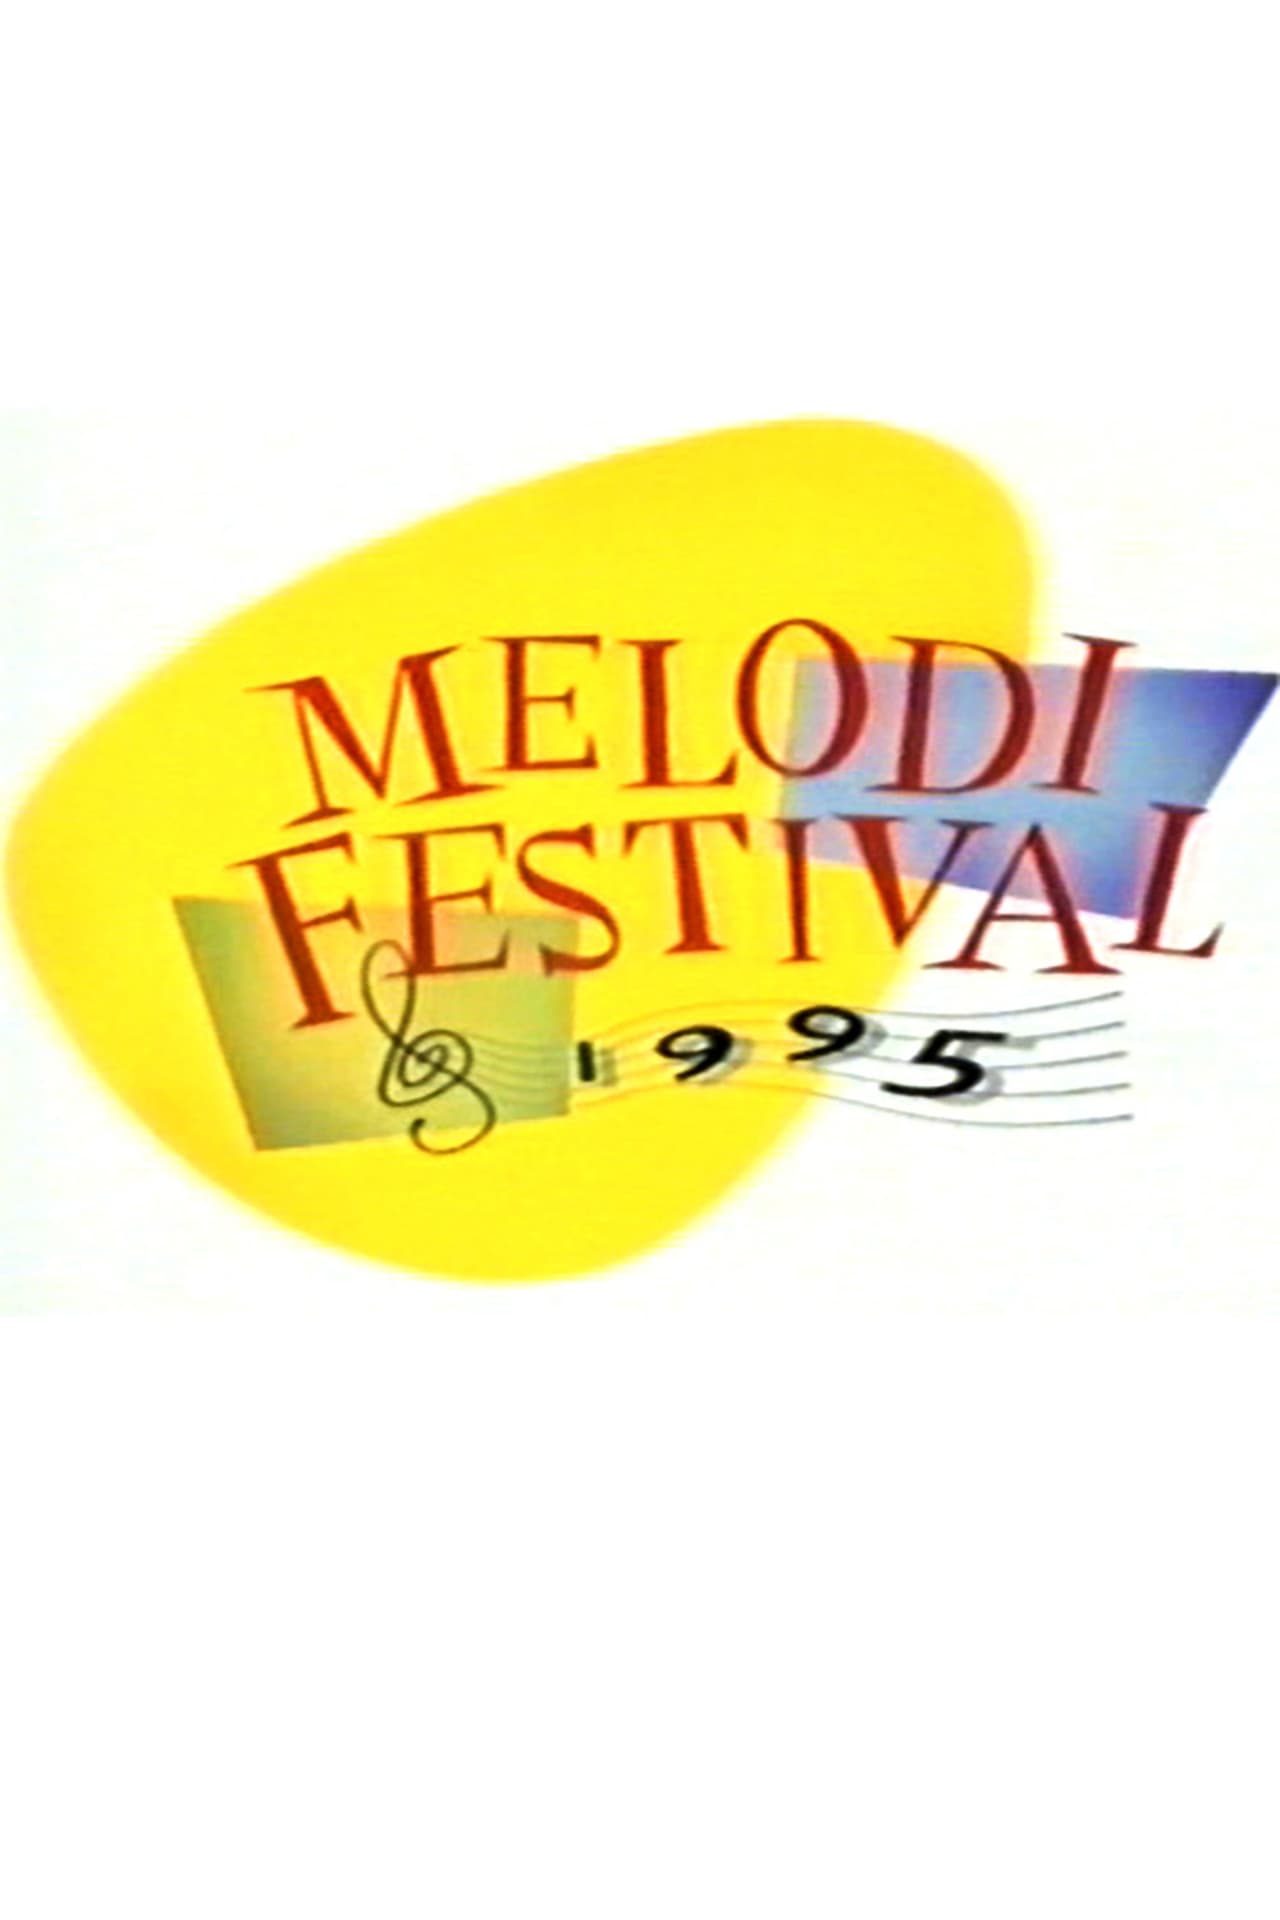 Melodifestivalen (1995)